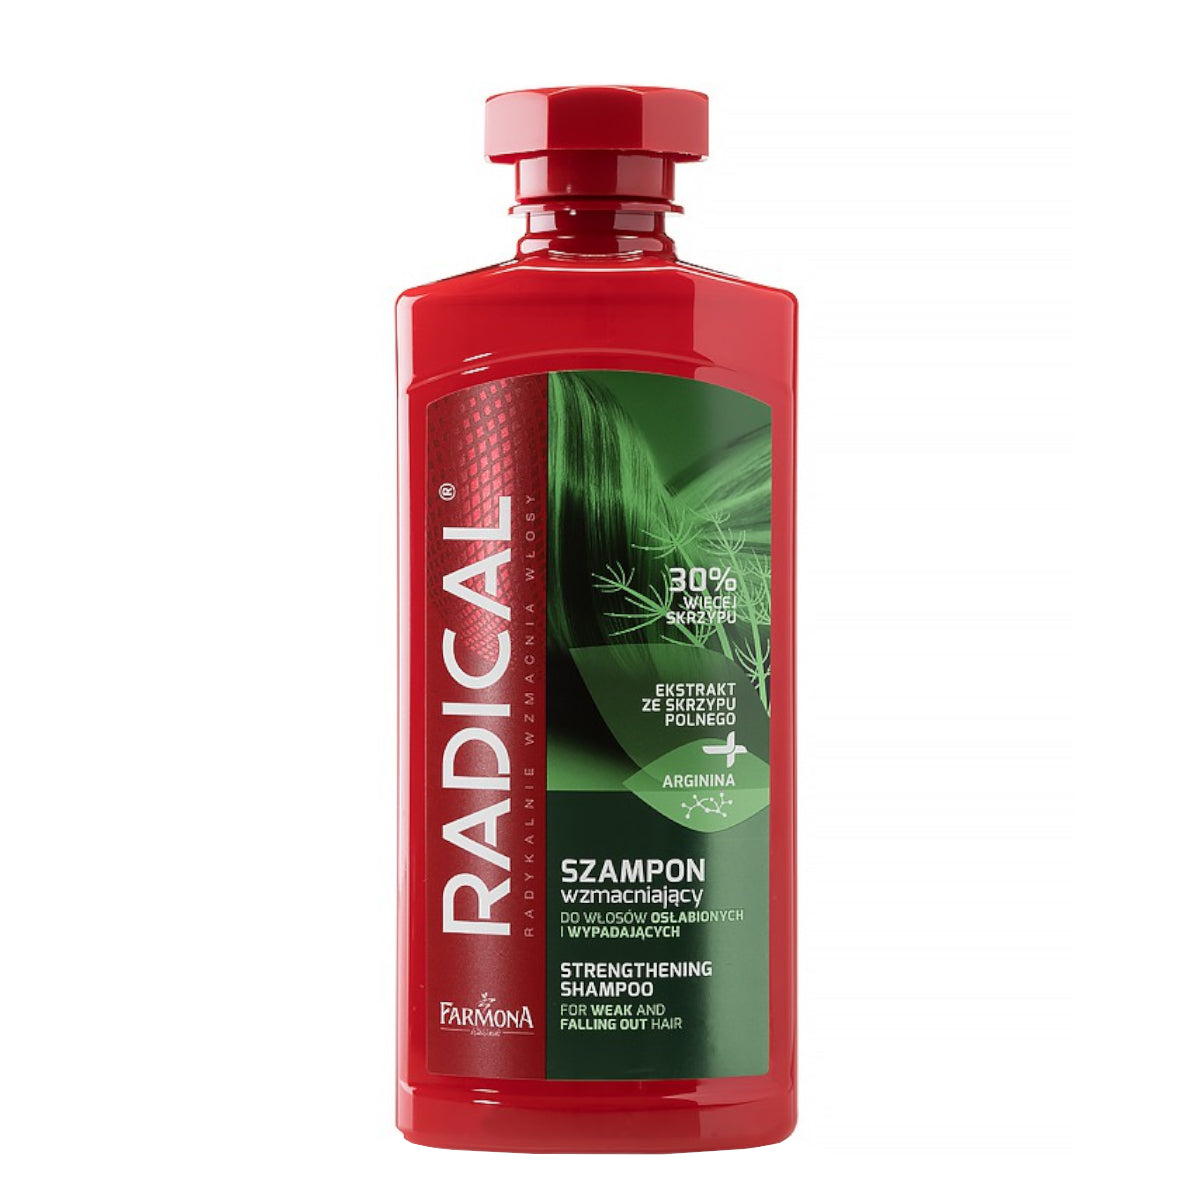 Farmona Radical Strengthening Shampoo Weak & Falling Out Hair